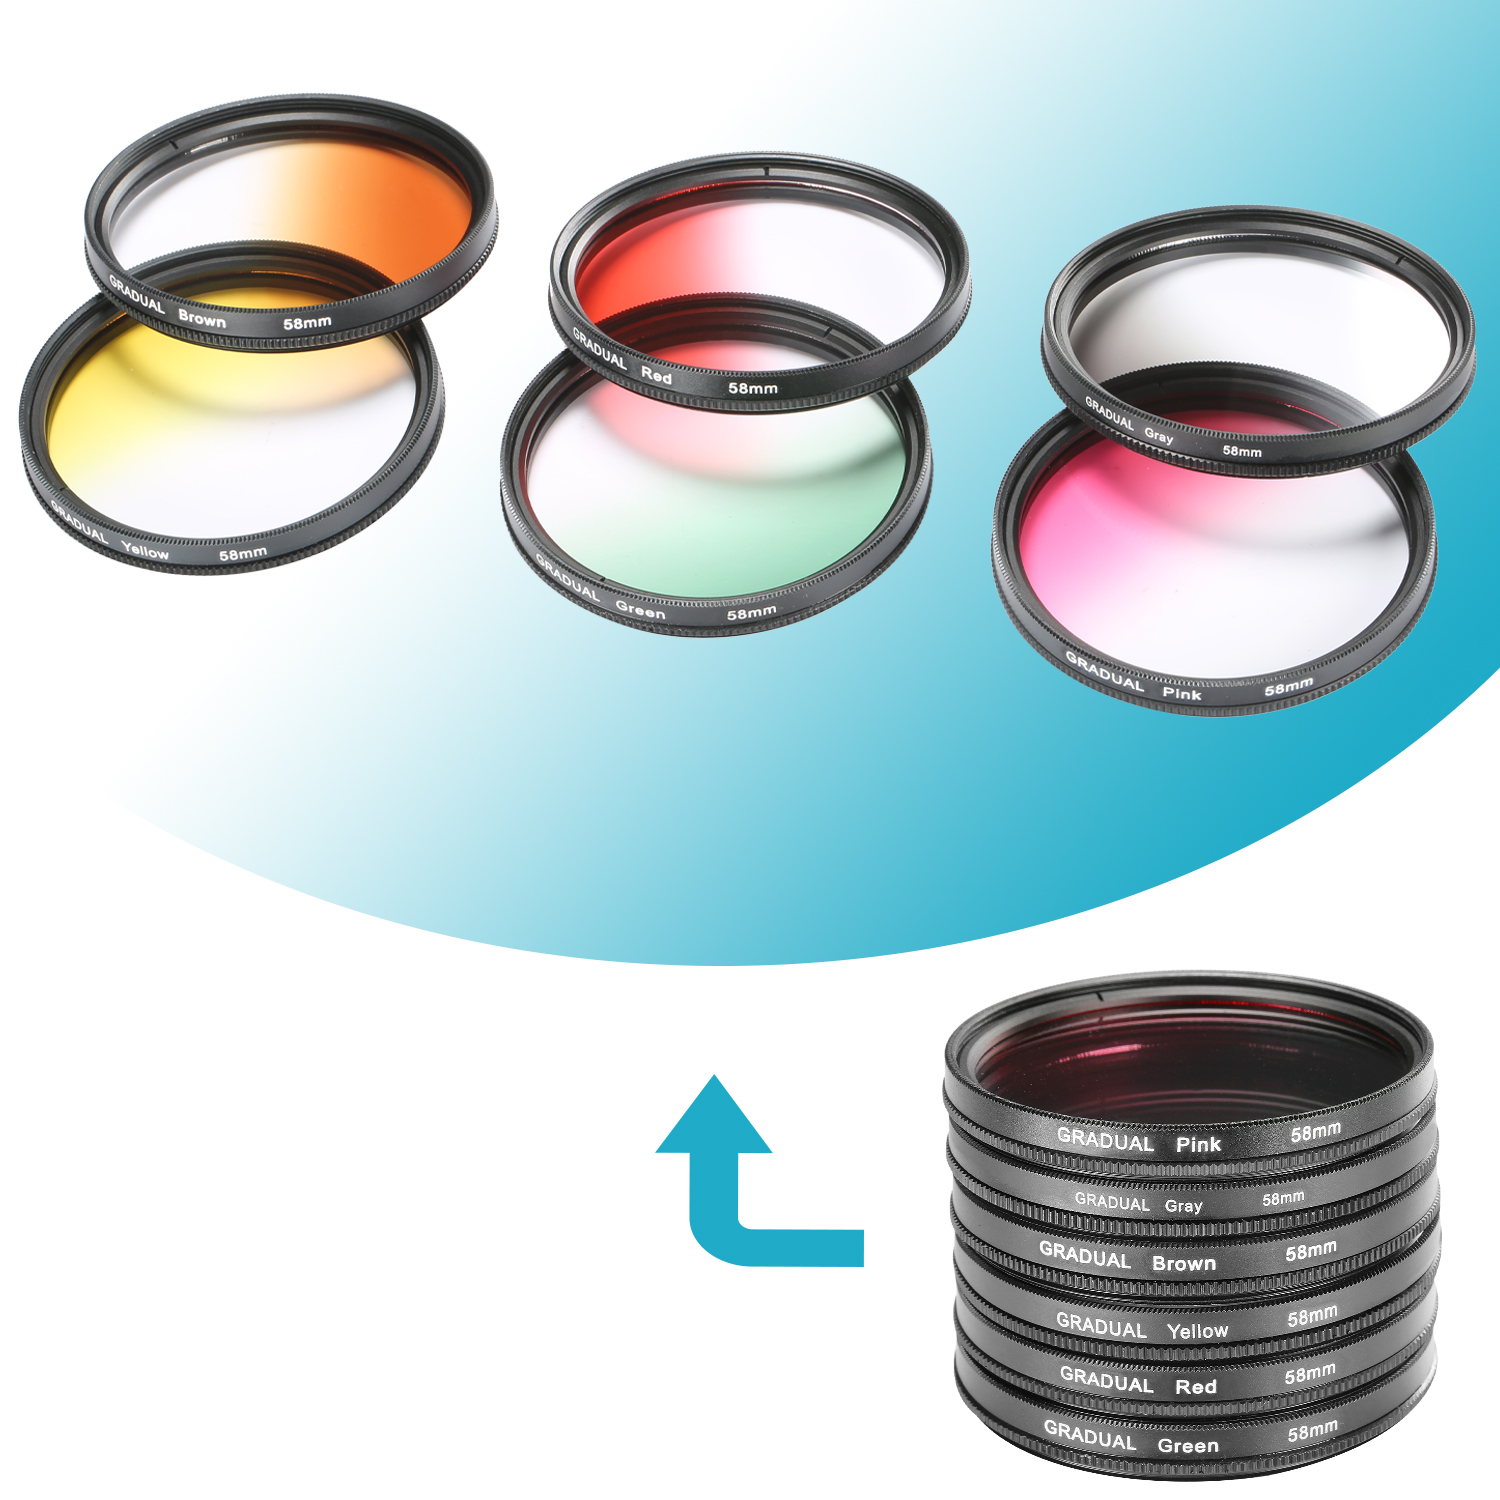 Neewer 58mm 18 Pcs Lens Filter Kit 9 Full Color Filter 9 Graduated Filter